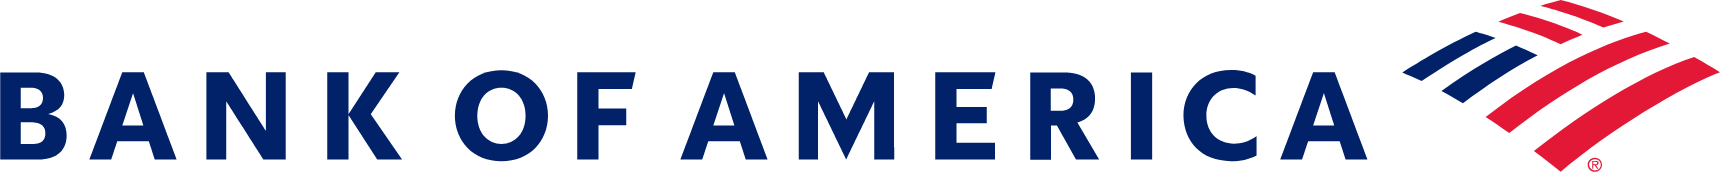 Bank of America  logo large (transparent PNG)